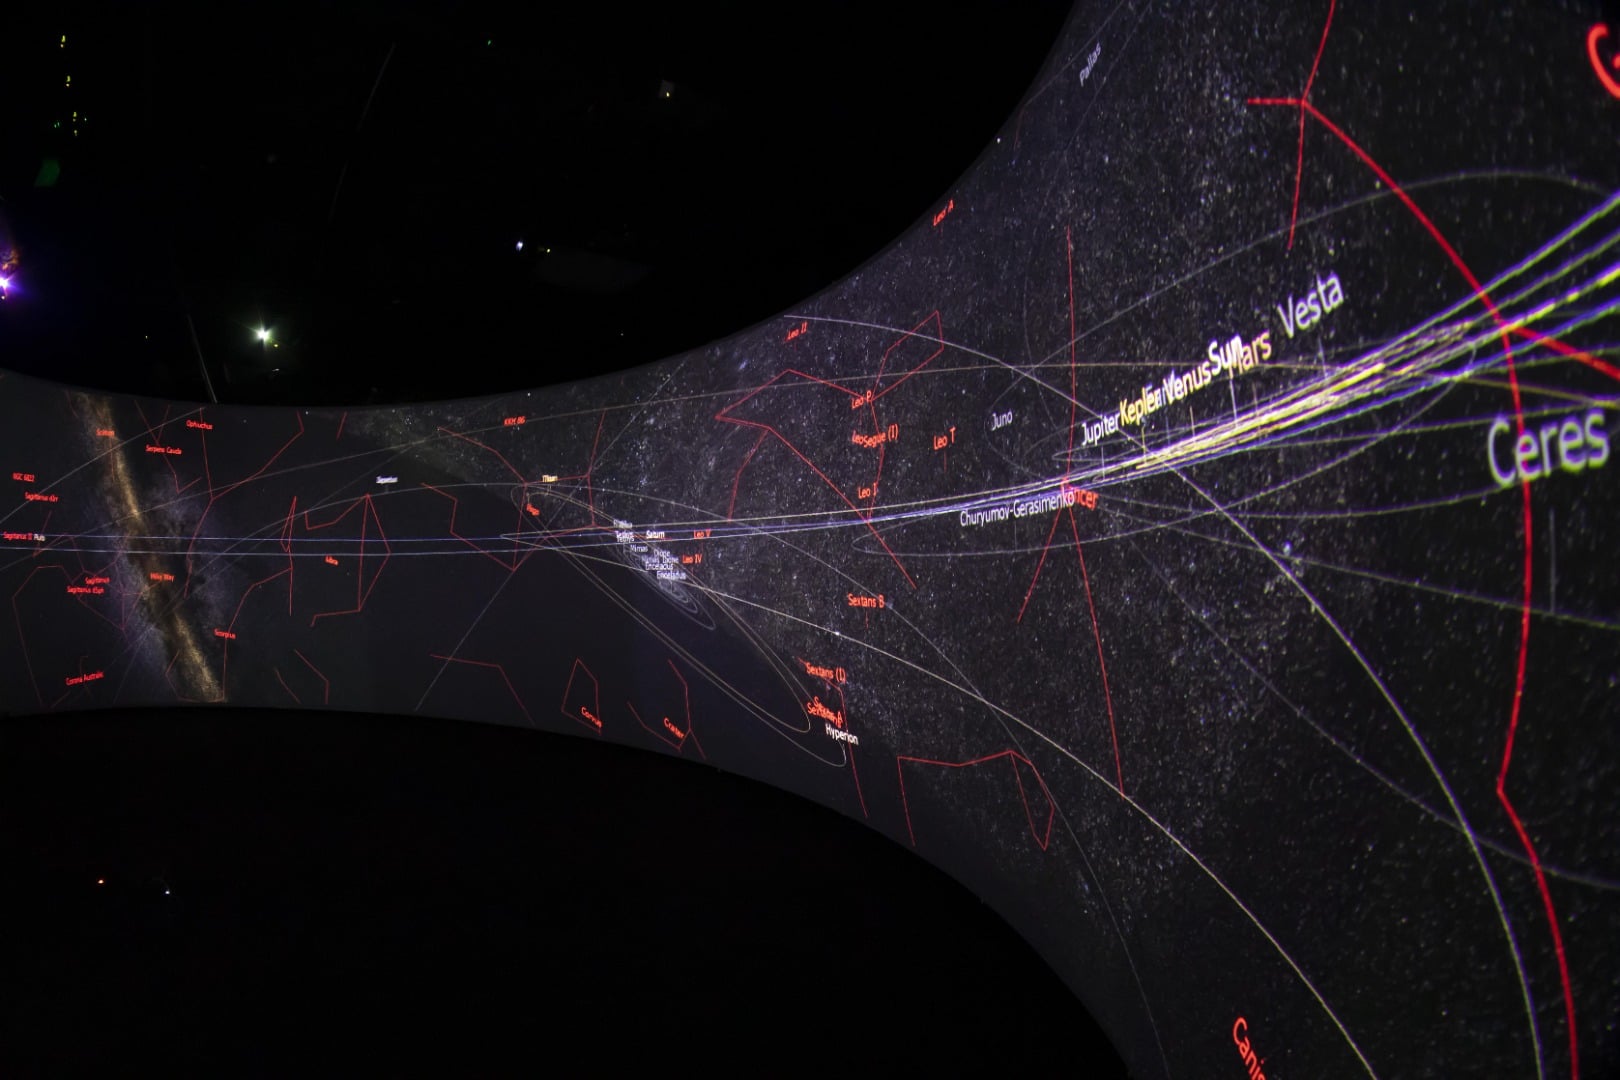 EPFL’s Virtual Space Tour